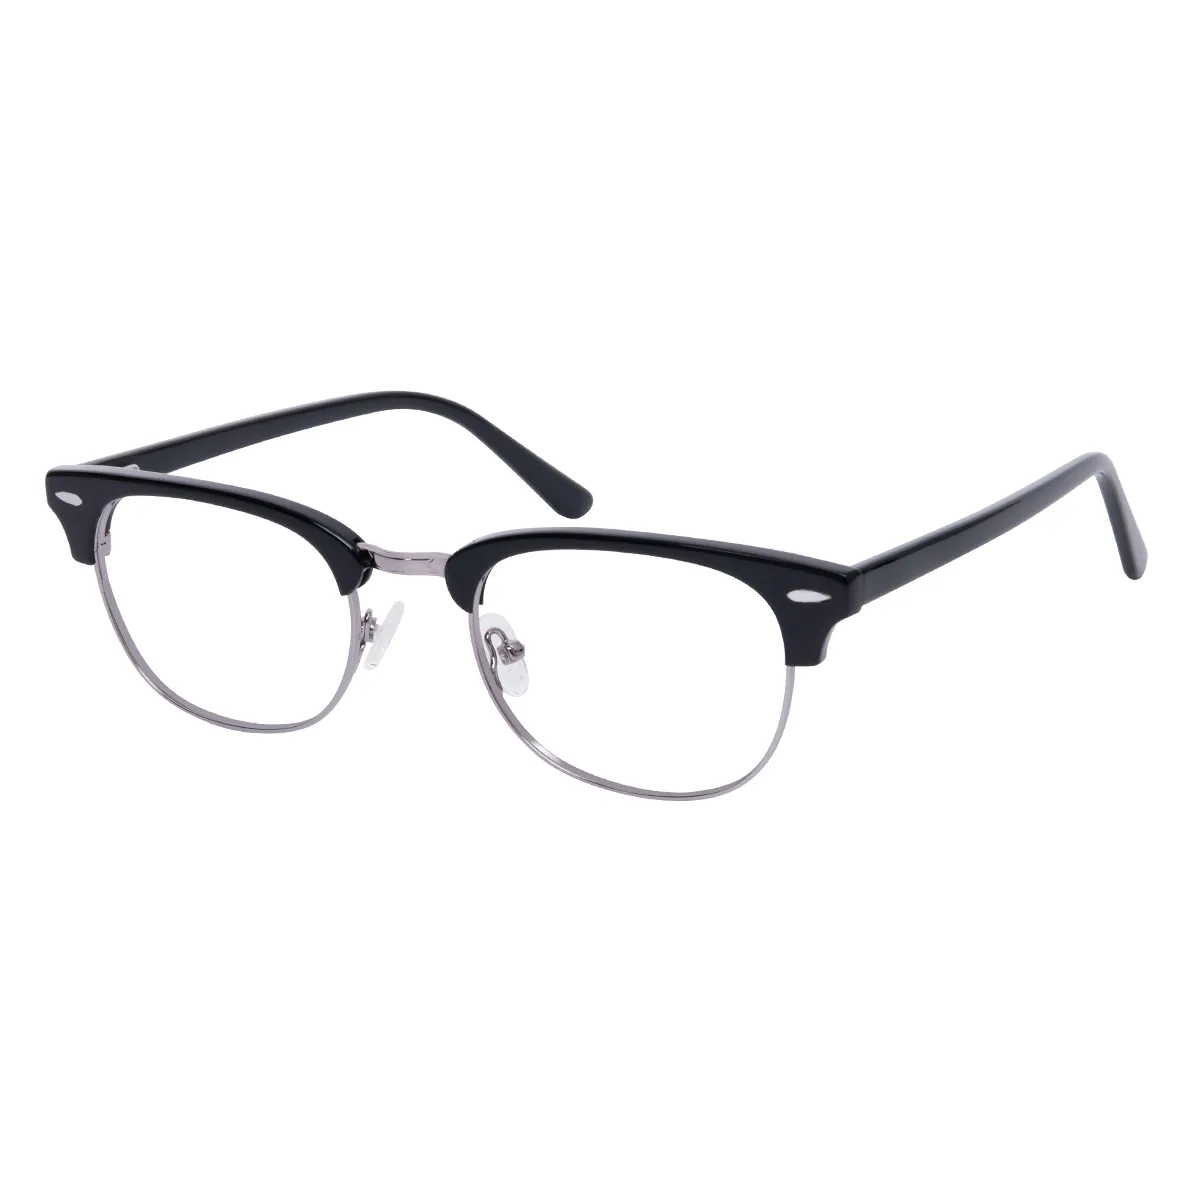 Andres - Browline Black-Silver Glasses for Men & Women